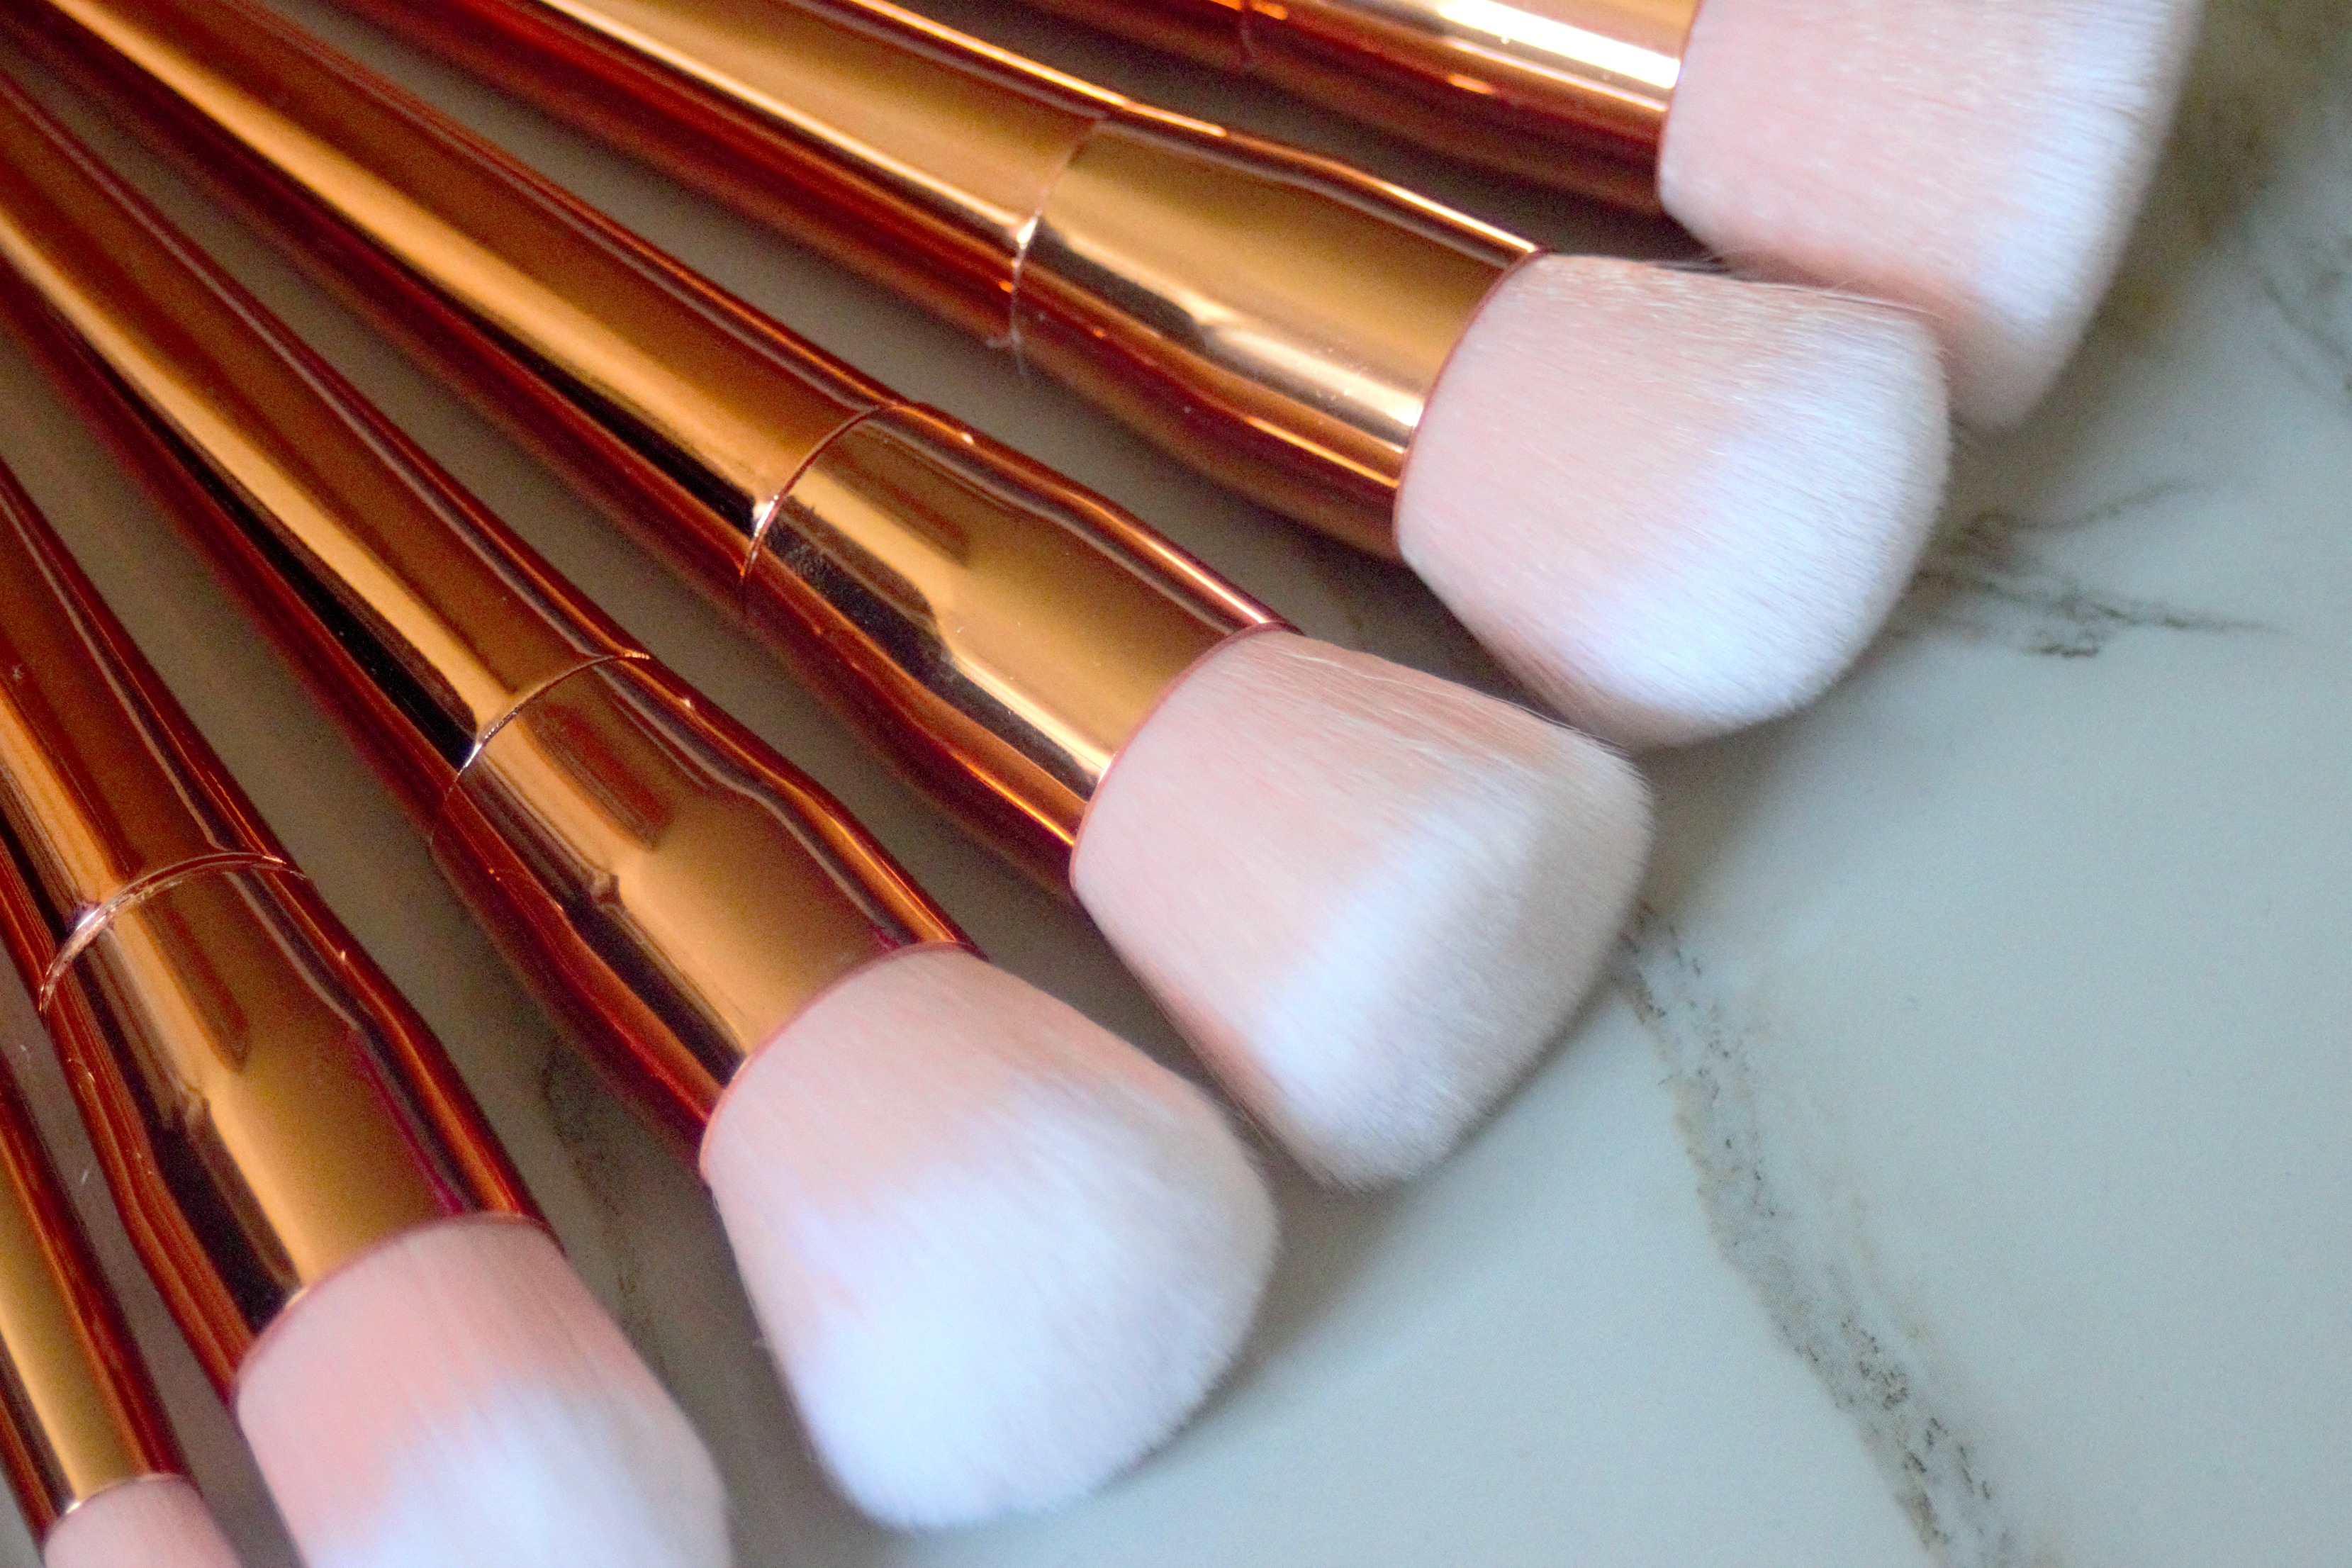 aliexpress rose gold makeup brushes